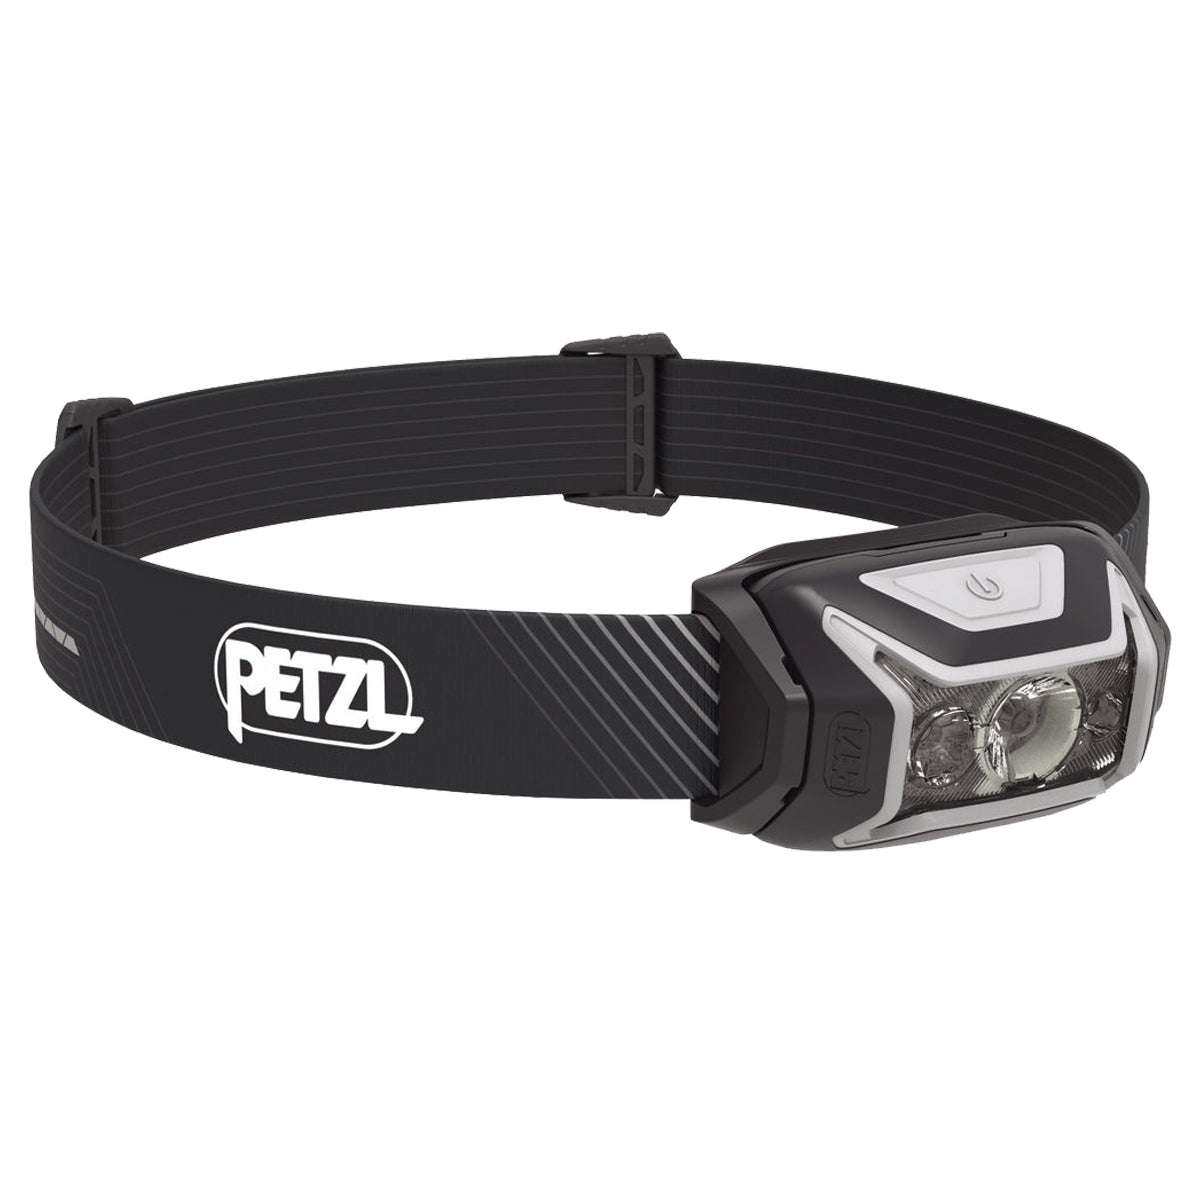 Petzl Actik Core Headlamp in  by GOHUNT | Petzl America - GOHUNT Shop